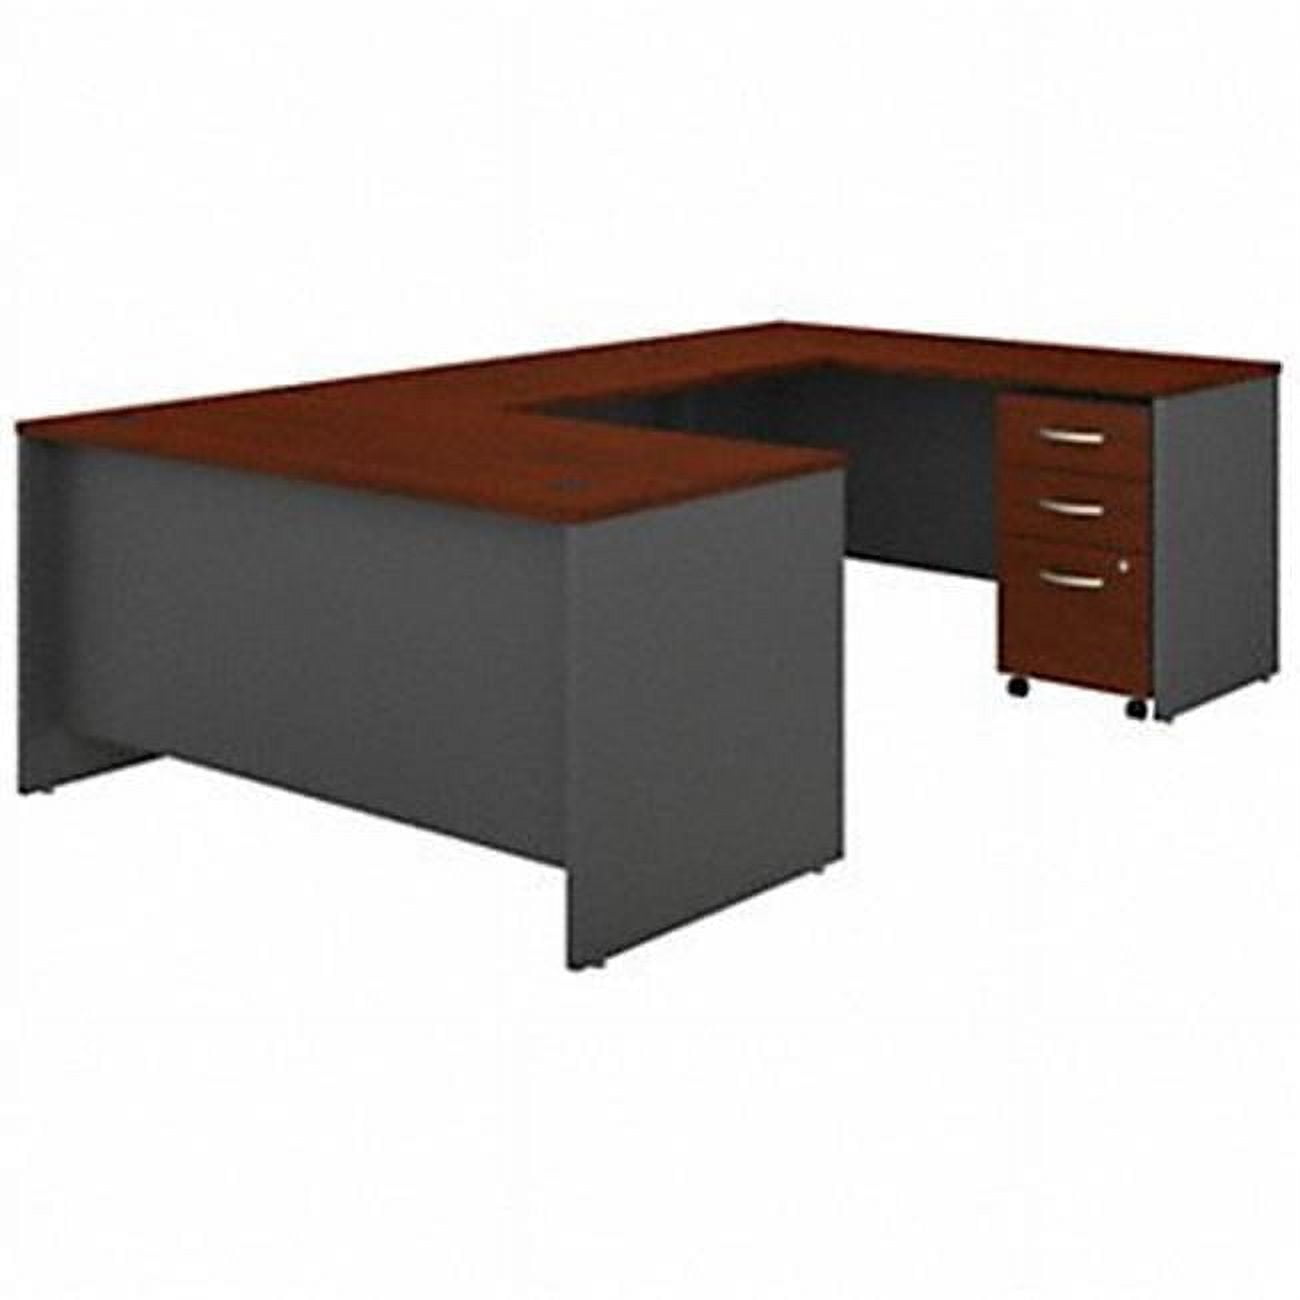 Picture of Bush Business Furniture SRC148HCSU 60 in. Series C U Shaped Desk with 3 Drawer Mobile File Cabinet, Hansen Cherry